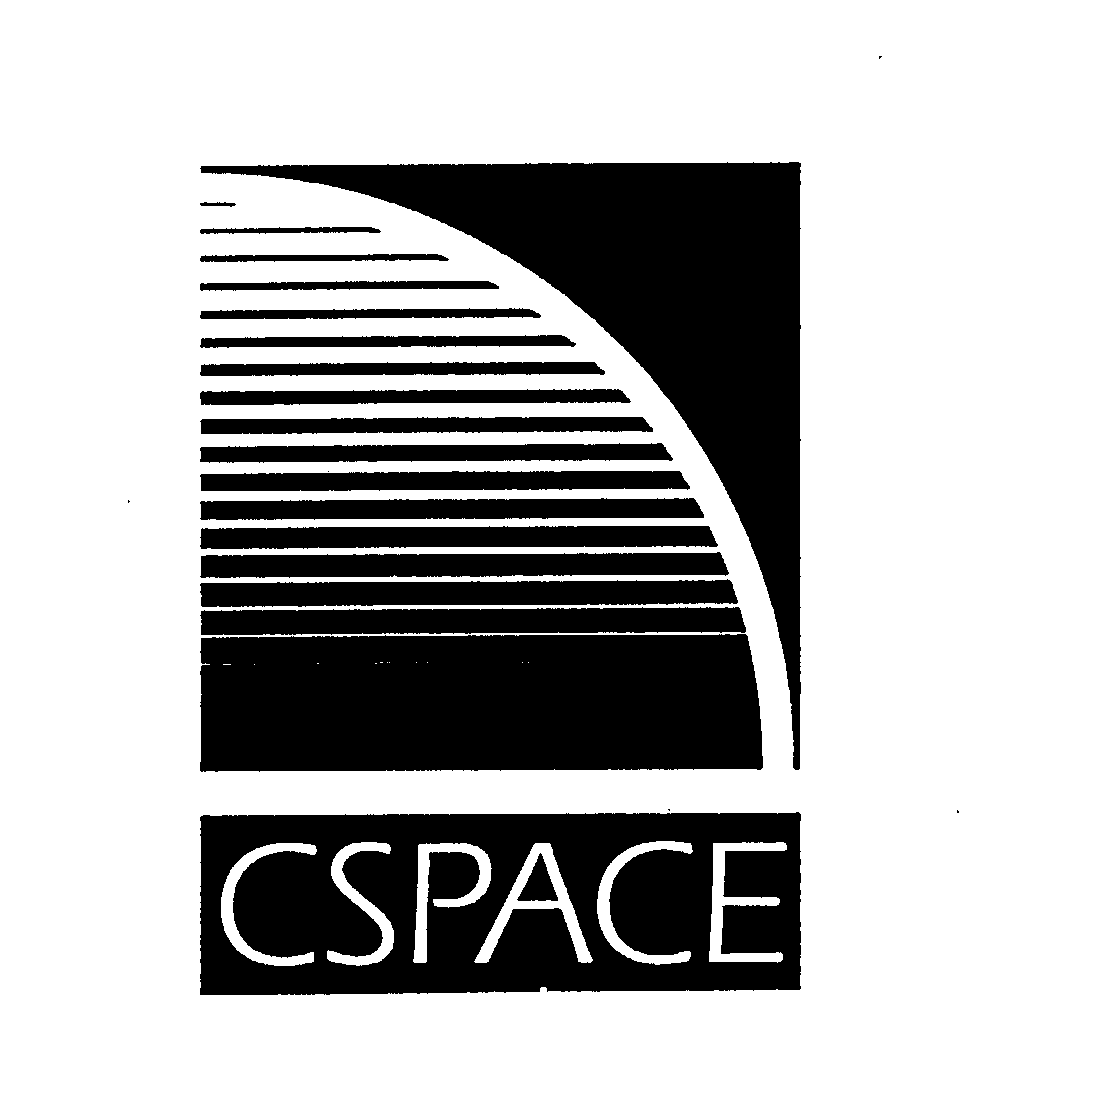  CSPACE